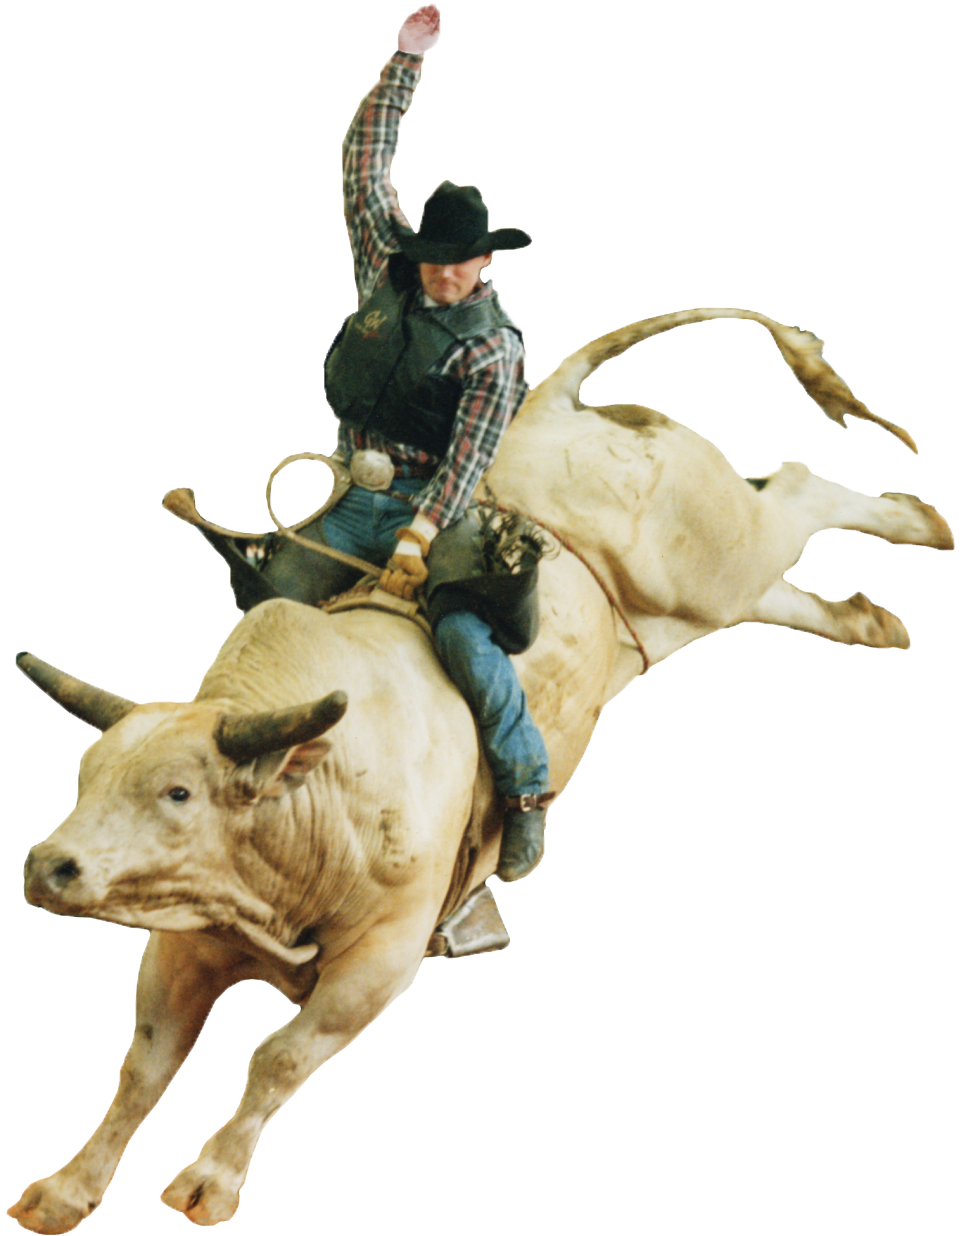 Rodeo bull rider attacked slo